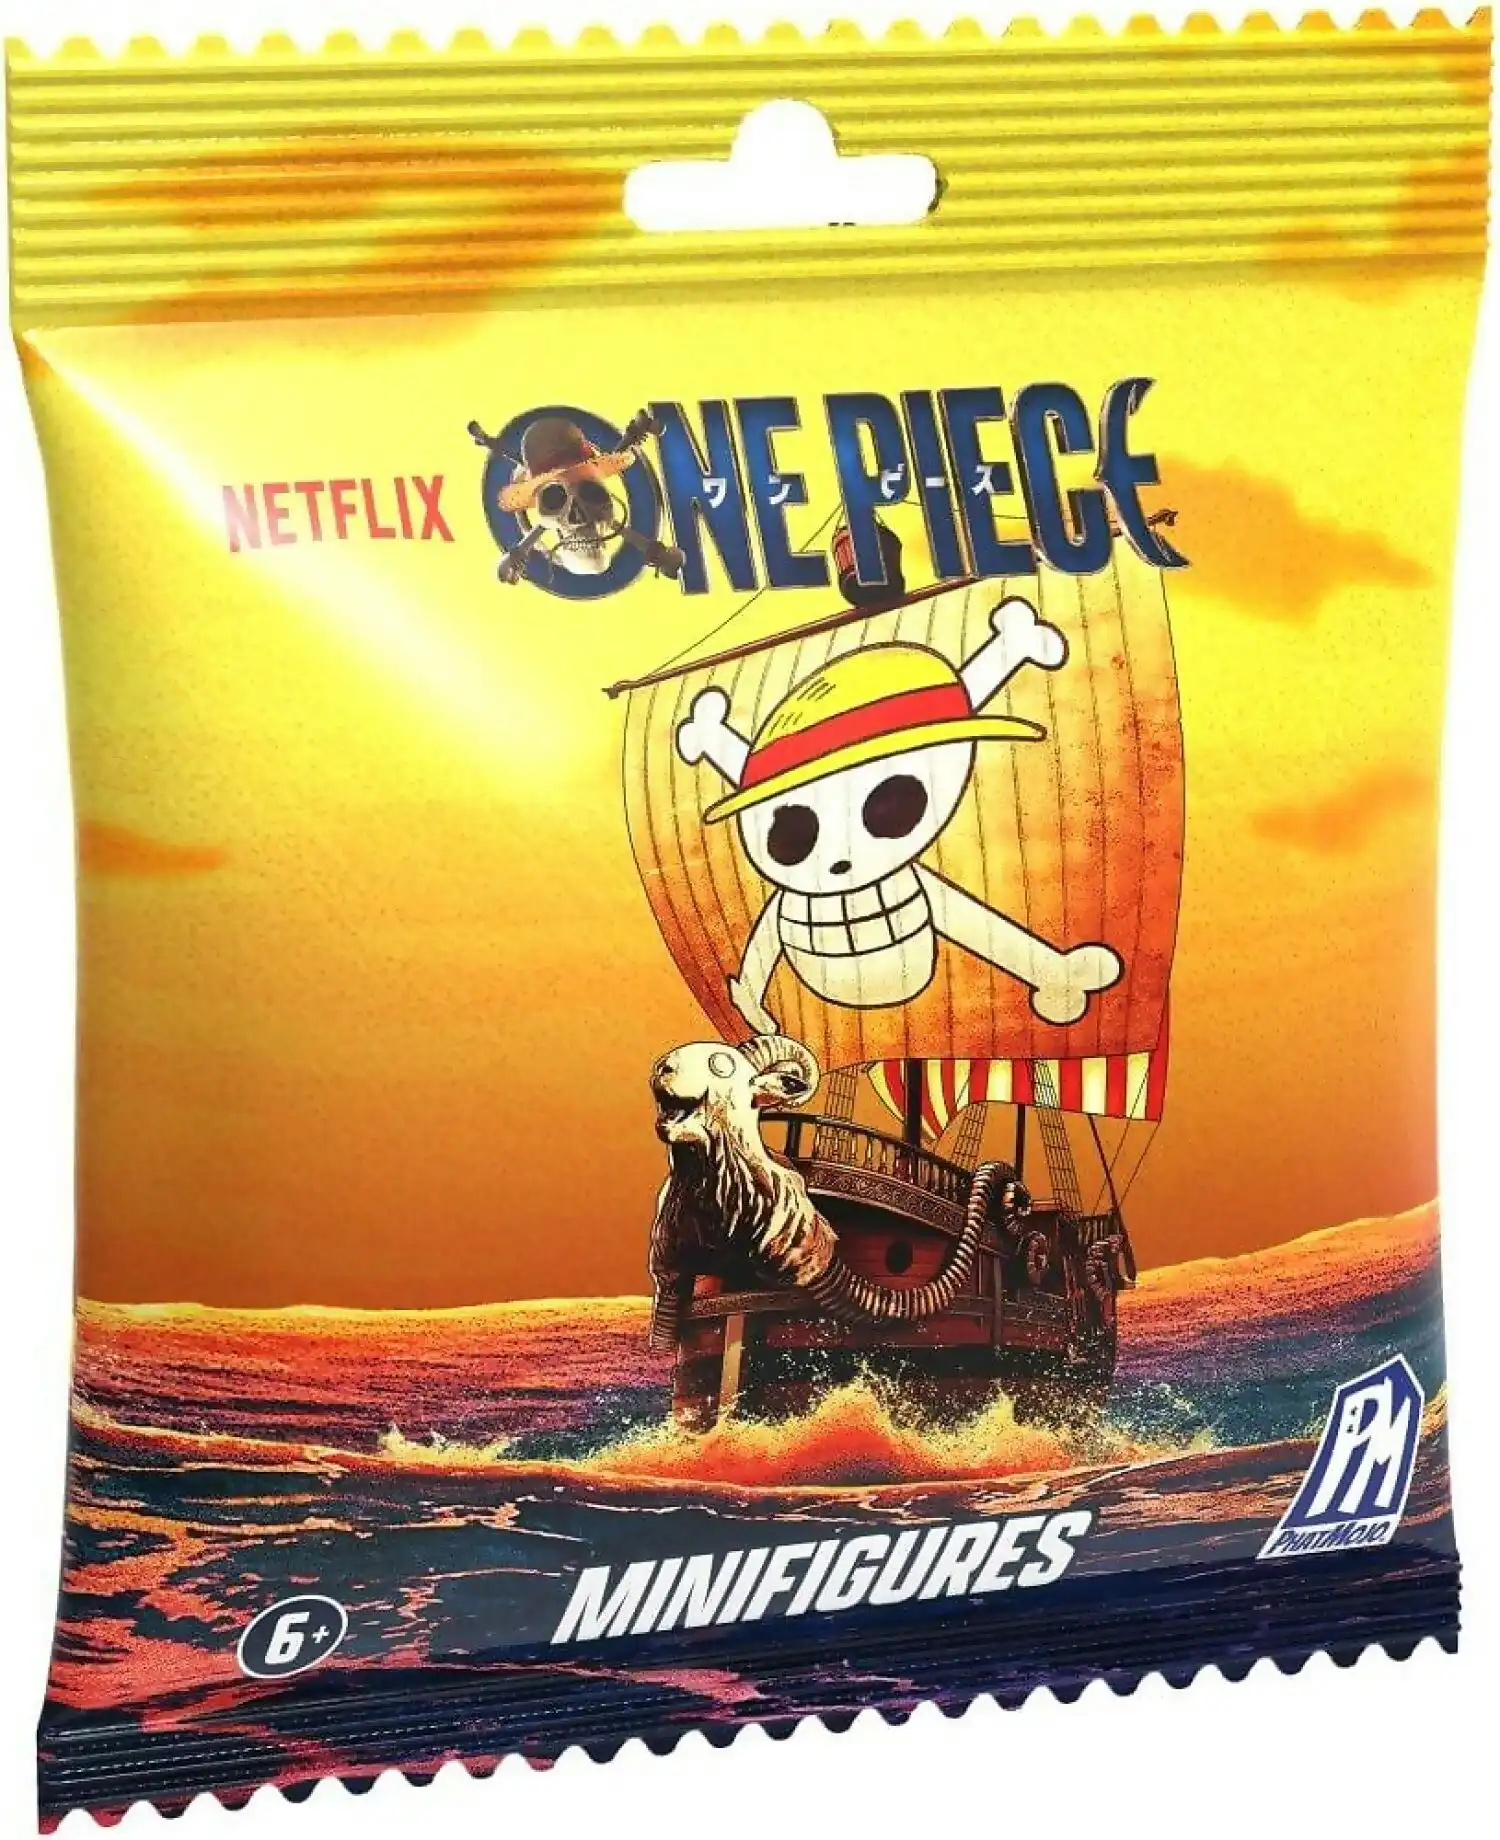 PhatMojo - Netflix One Piece Pirates Minifigures Series 1 Blind Bag